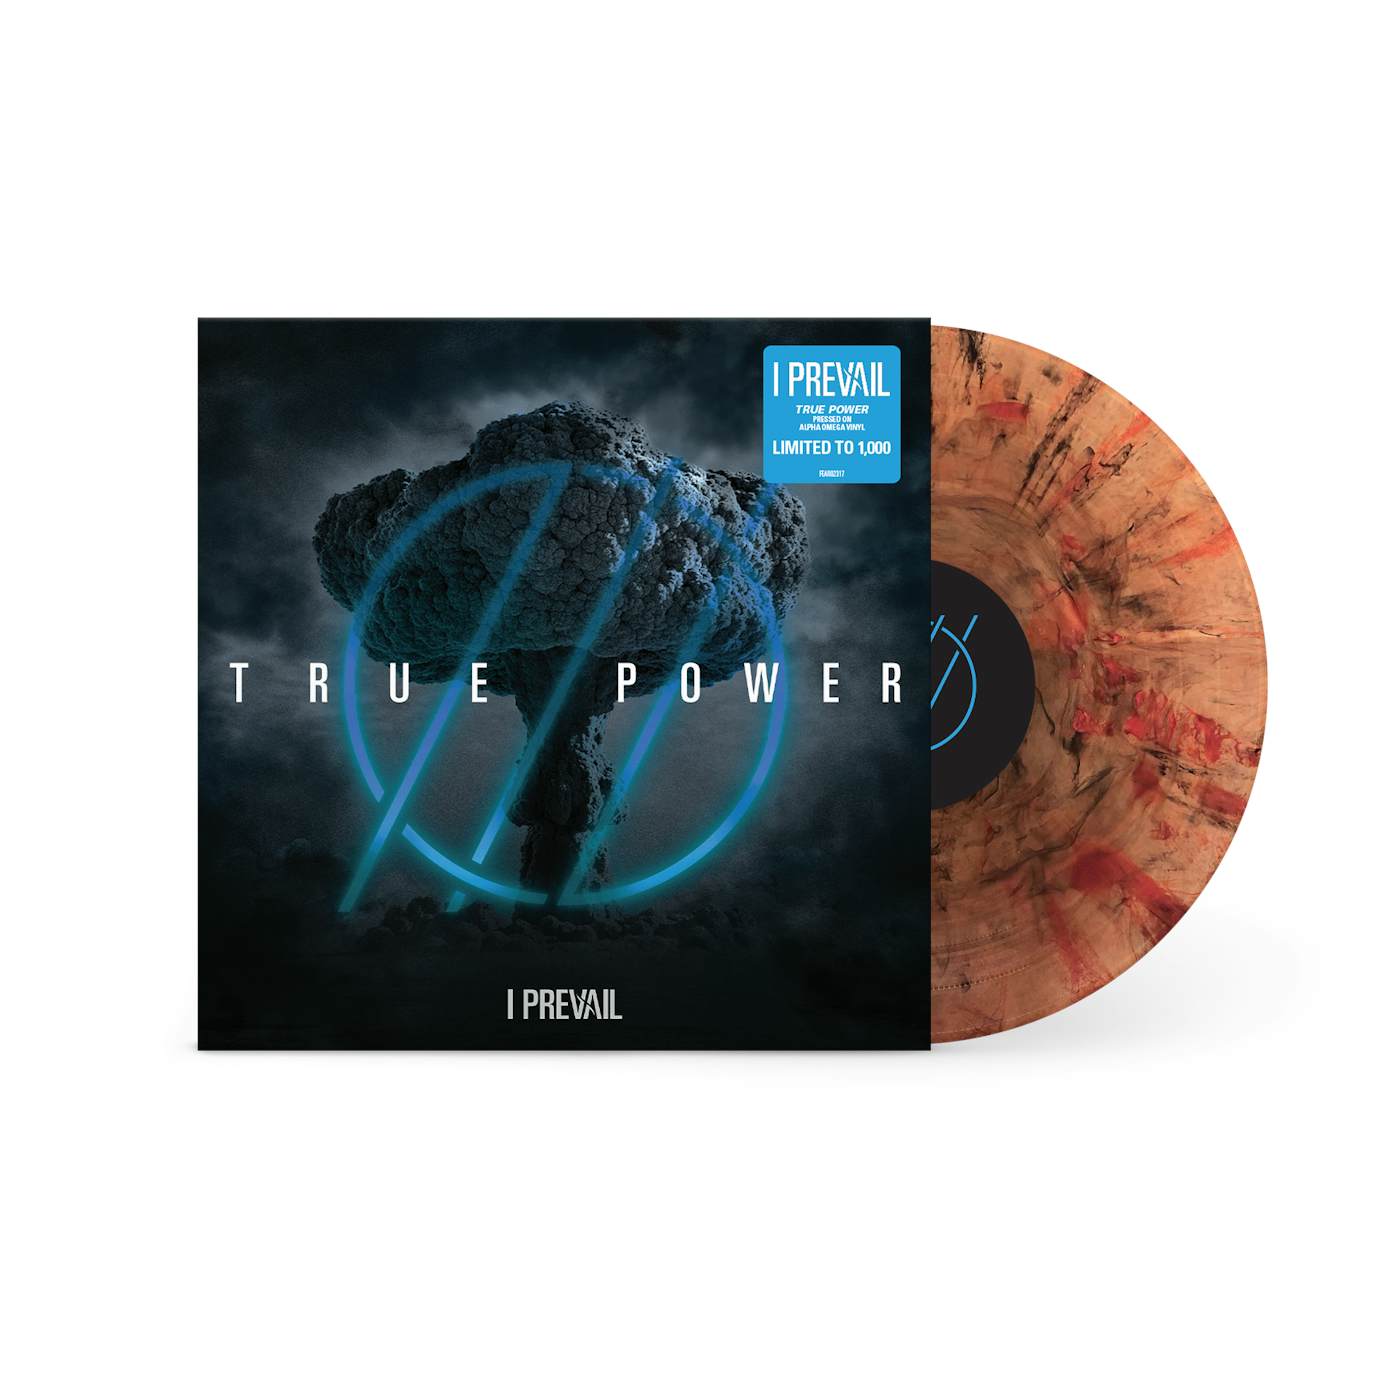 I Prevail "TRUE POWER" Alpha Omega Vinyl